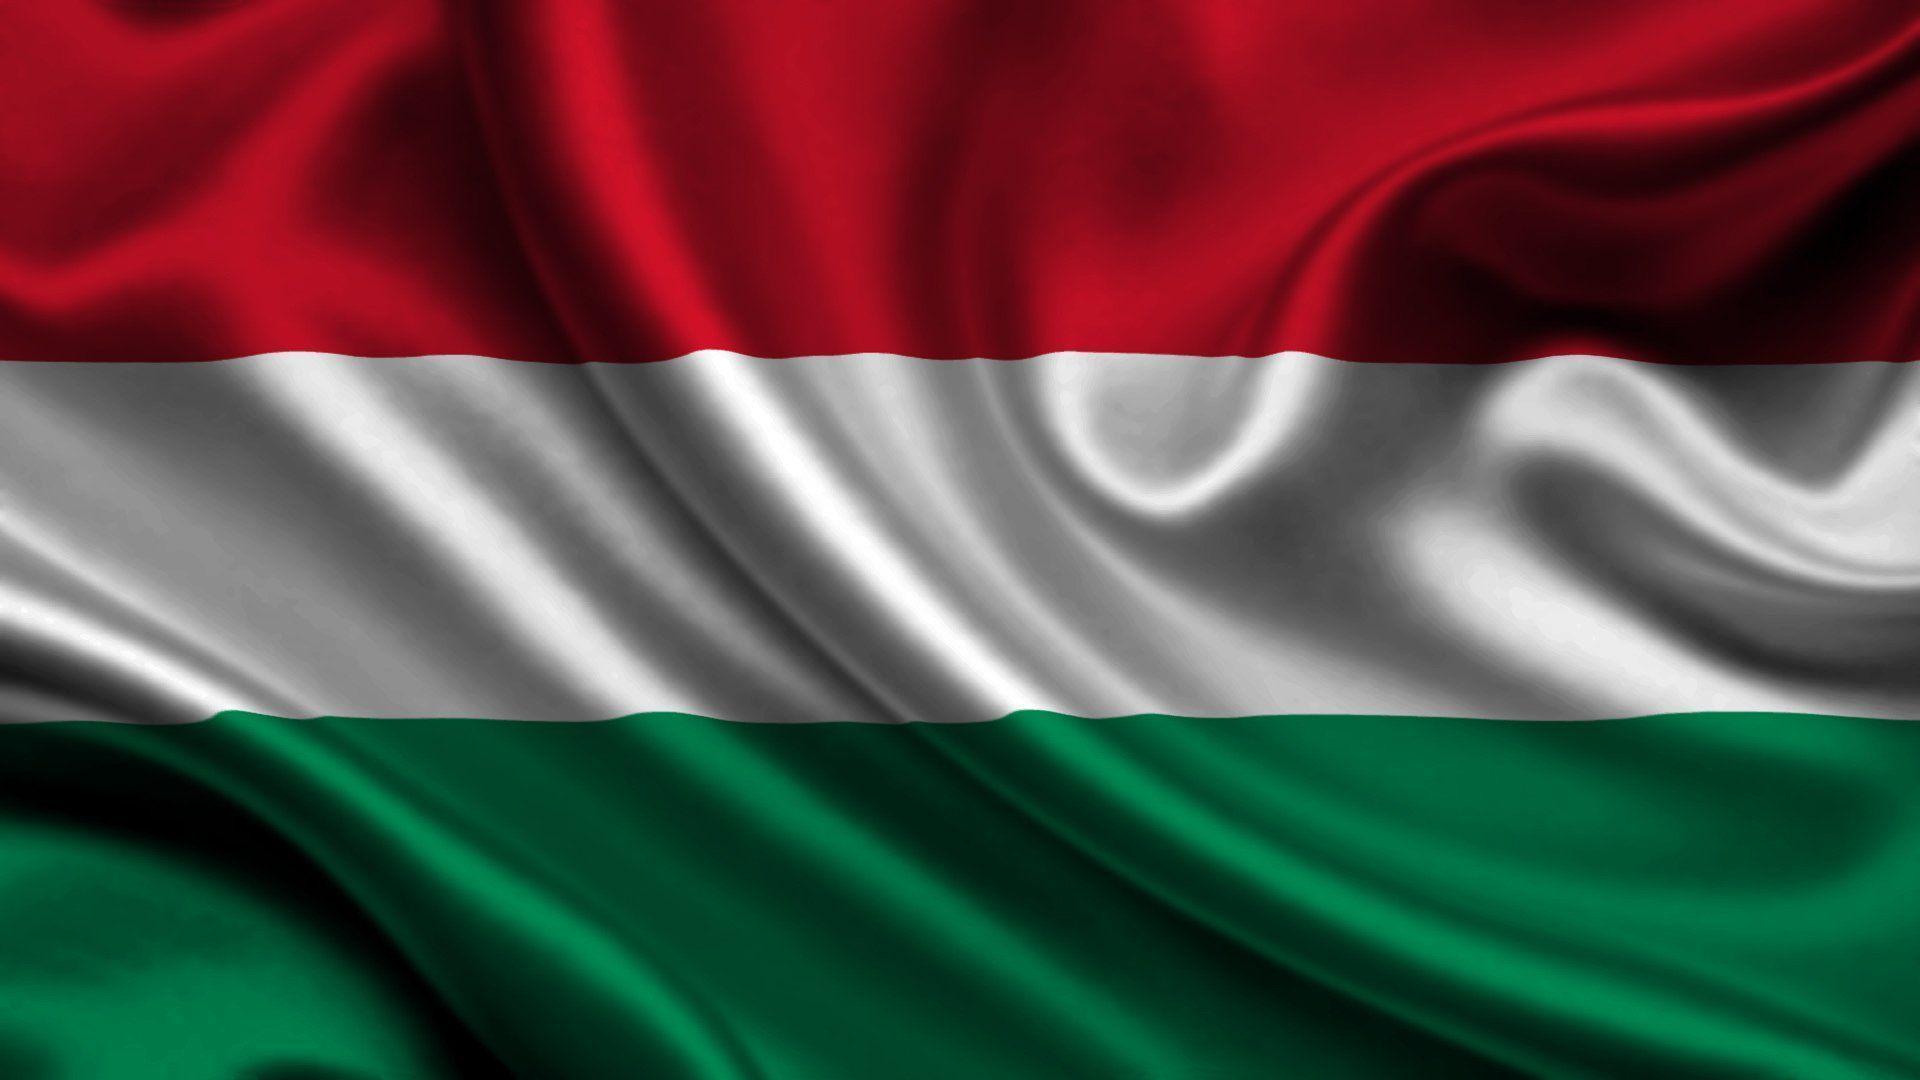 3 Flag Of Hungary HD Wallpapers